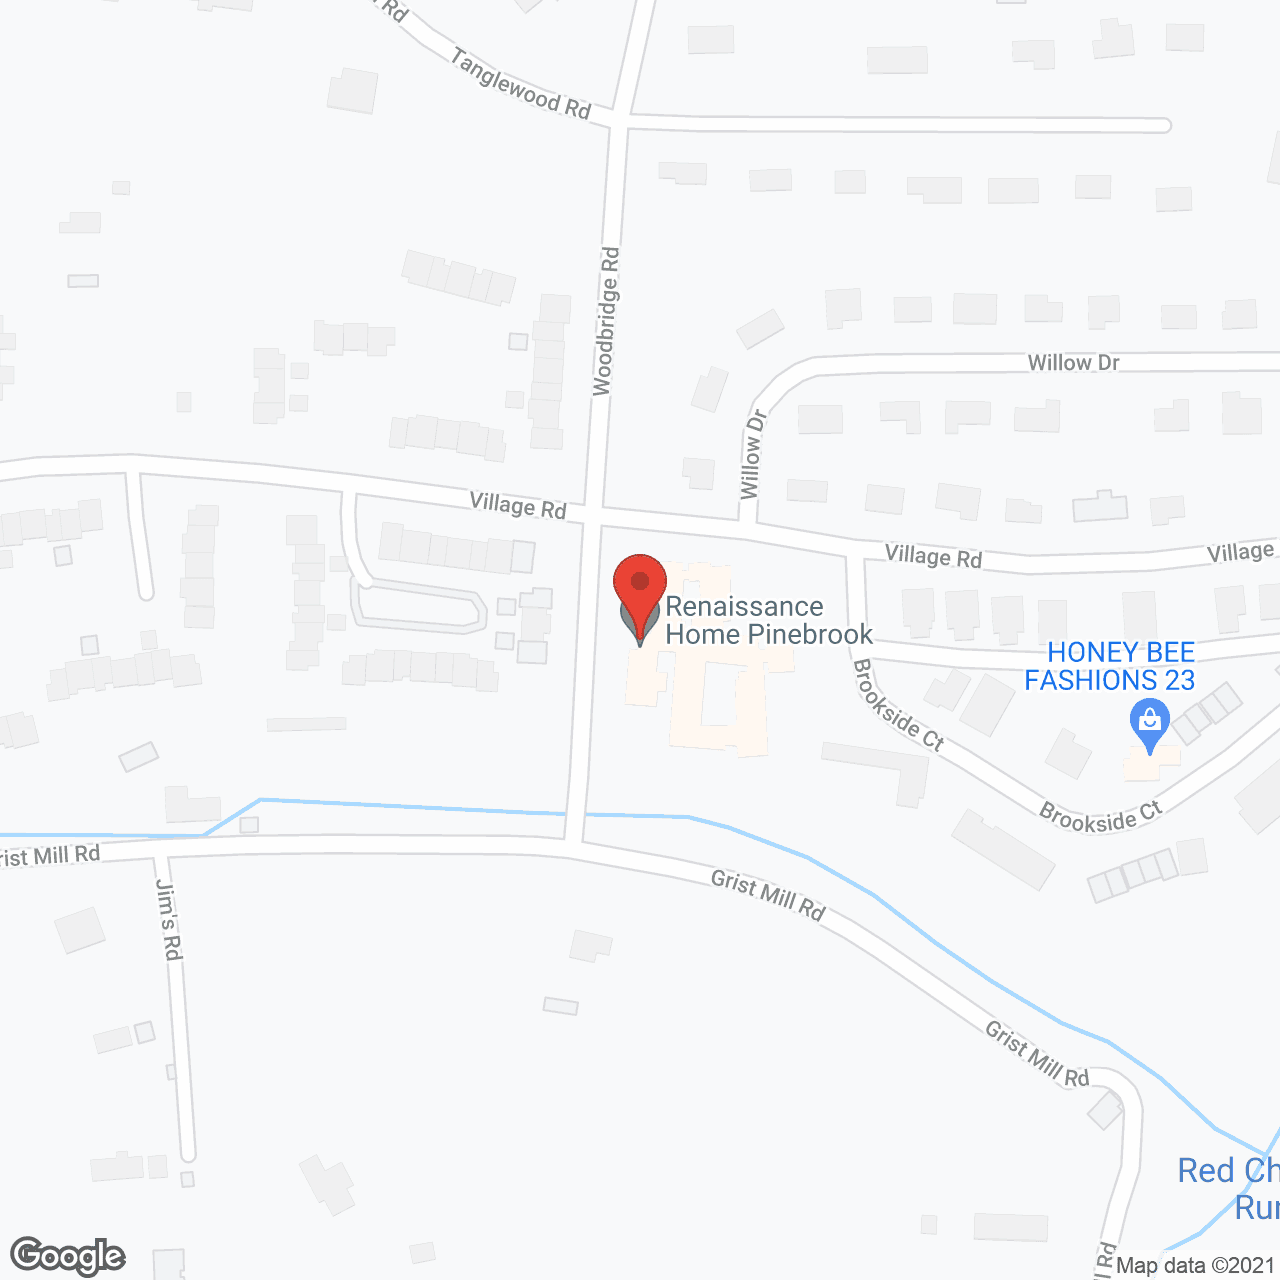 Weston Senior Living Center at Pinebrook in google map